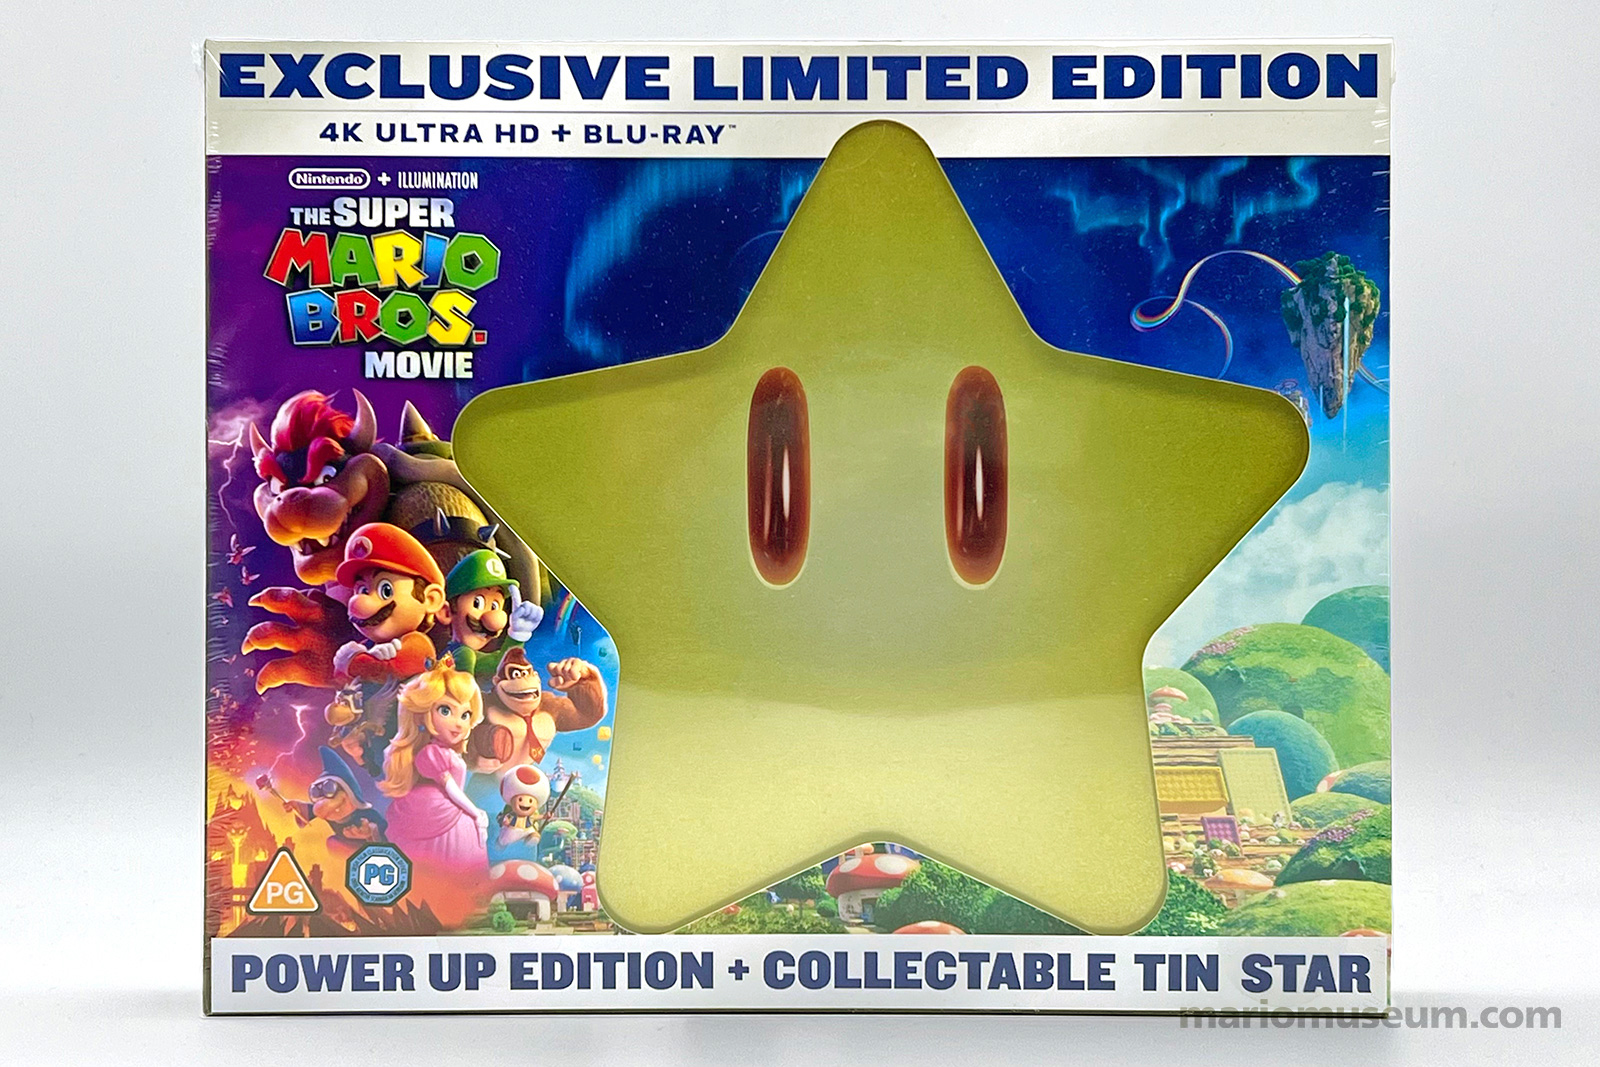 The Super Mario Bros. Movie 4K Power Up Edition + Collectable Tin Star